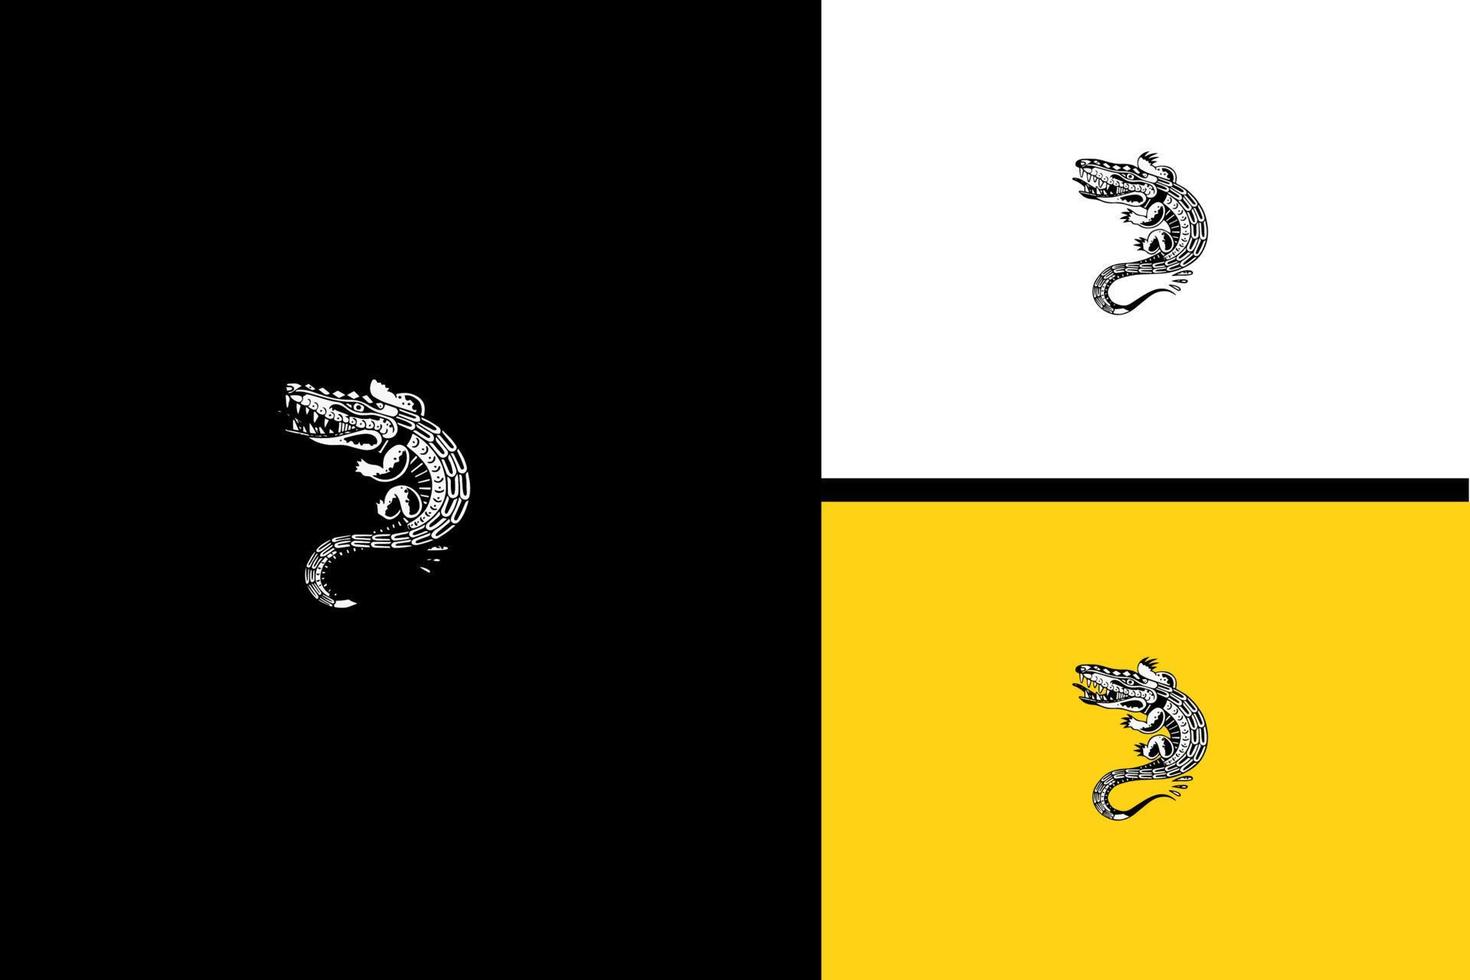 krokodil vector illustratie zwart en wit